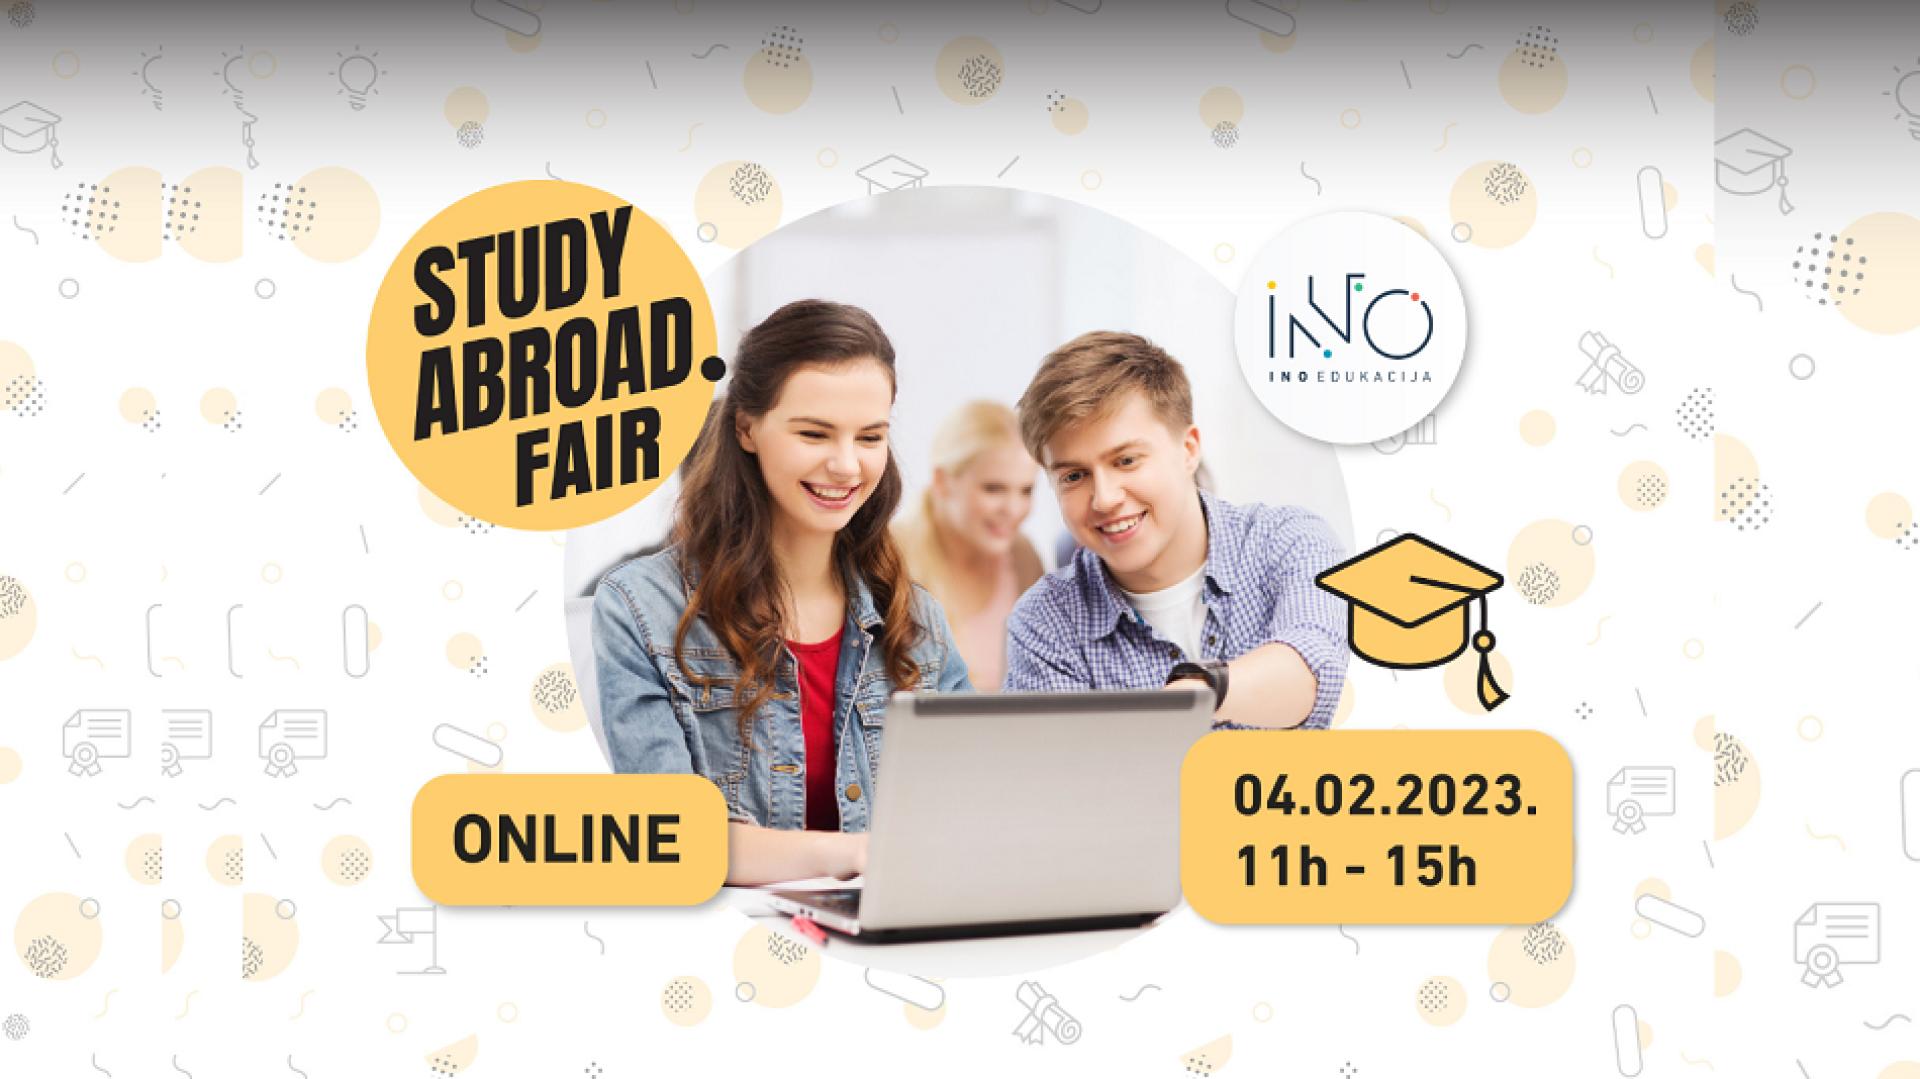 Online Study Abroad. Fair